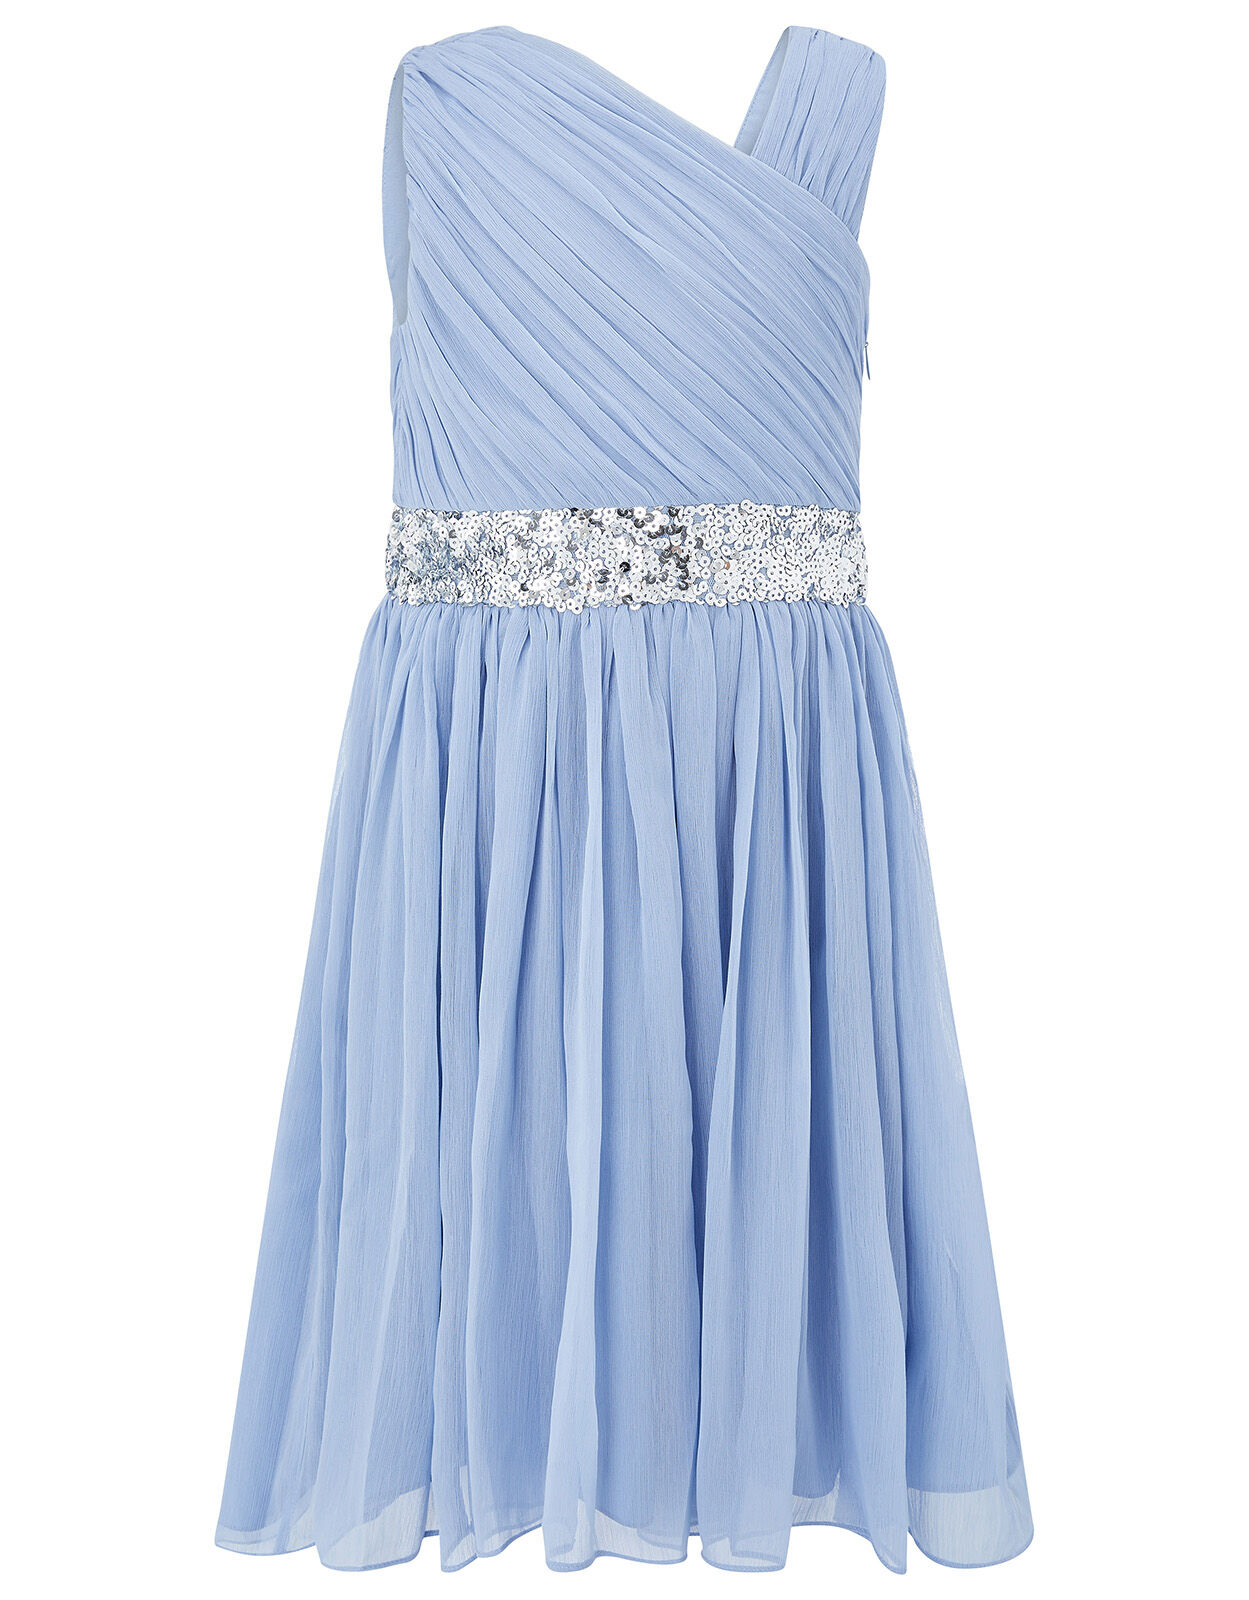 pale blue sparkly dress